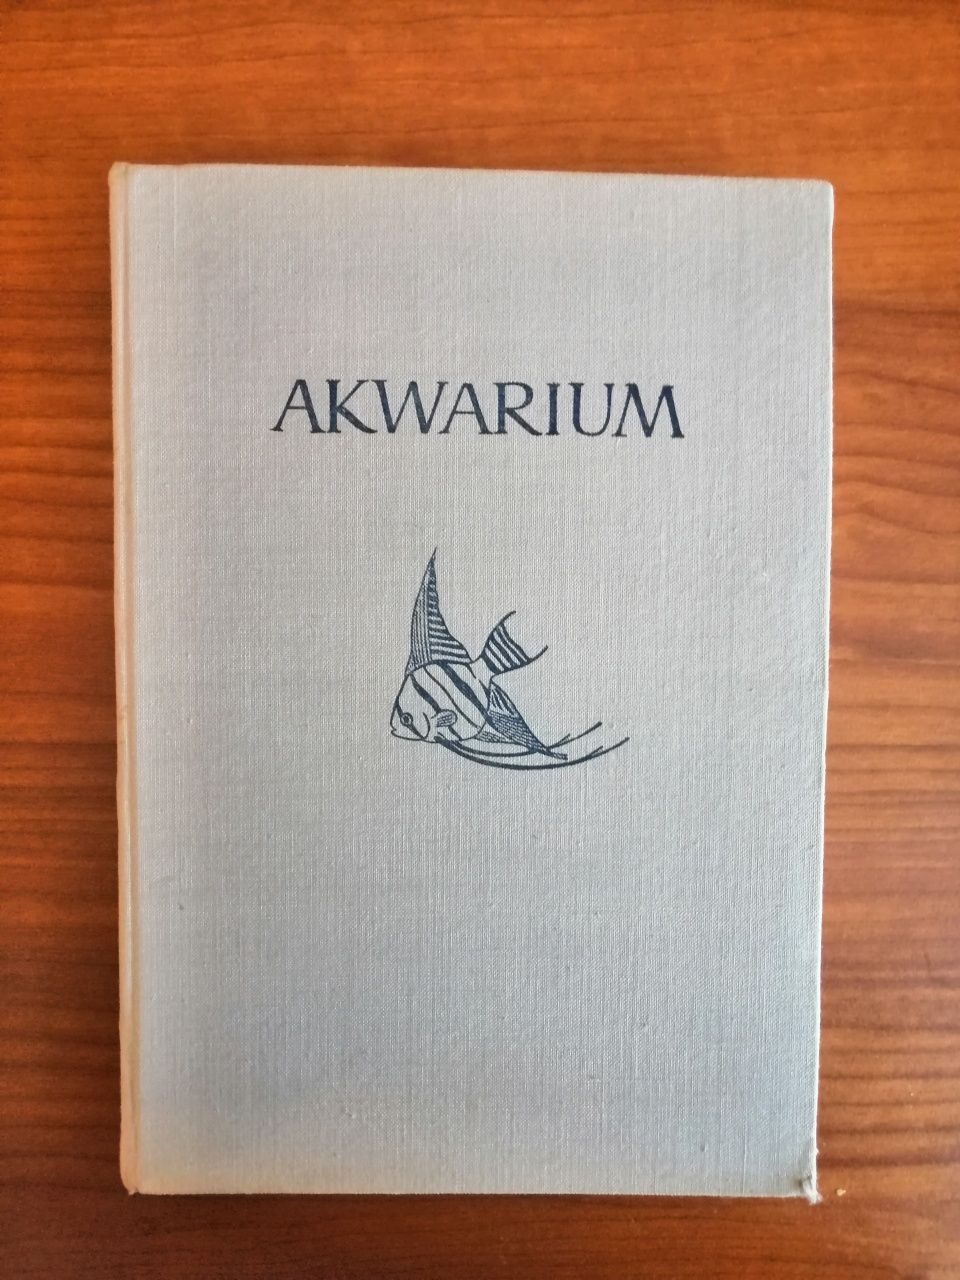 Akwarystyka akwarium Taborski Landowski Gabryś 1957 antykwariat